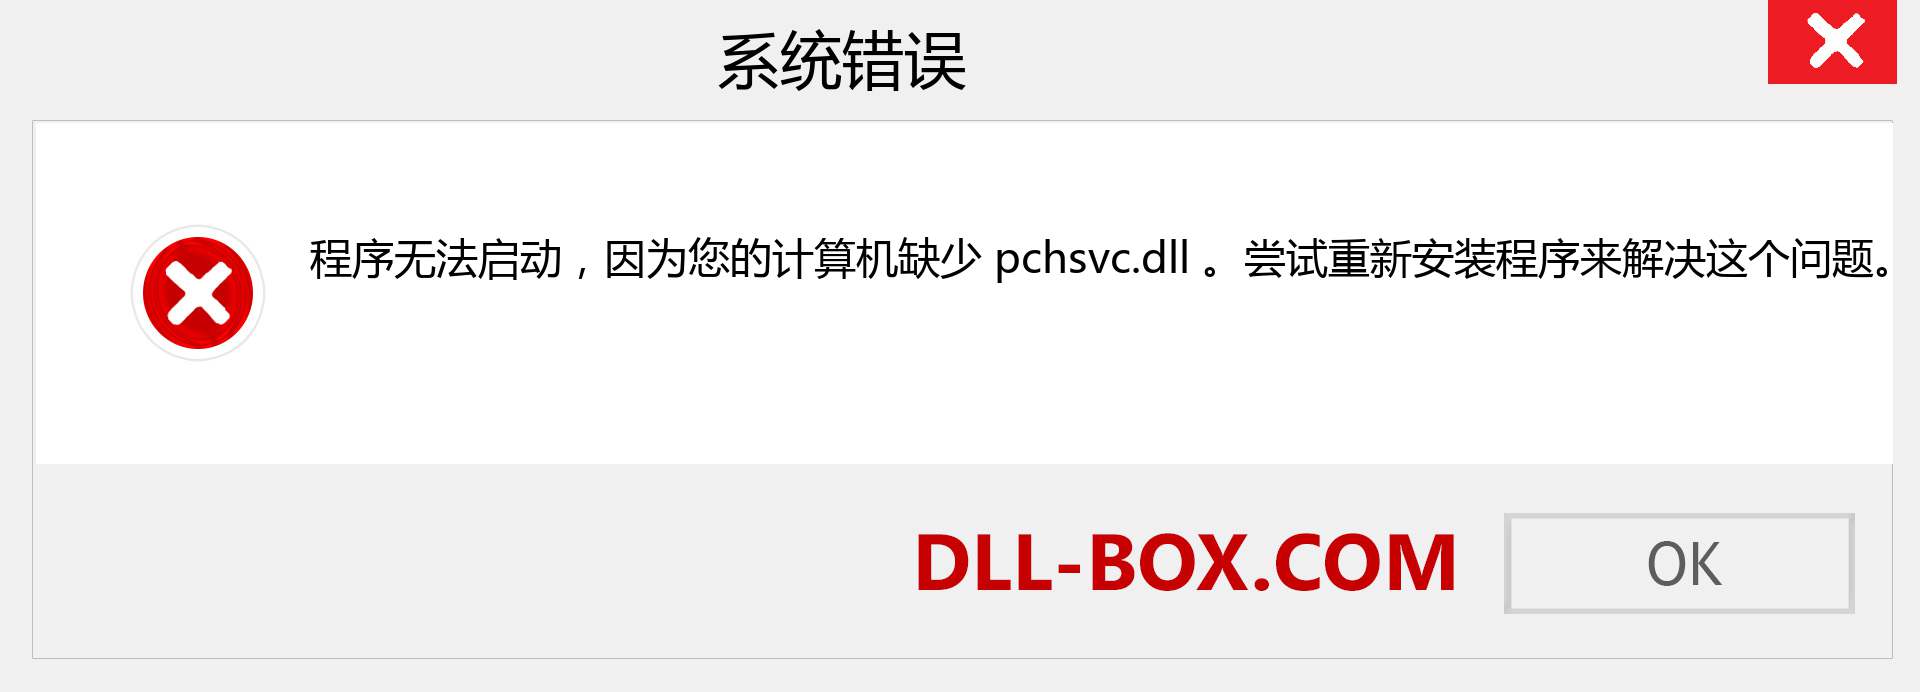 pchsvc.dll 文件丢失？。 适用于 Windows 7、8、10 的下载 - 修复 Windows、照片、图像上的 pchsvc dll 丢失错误